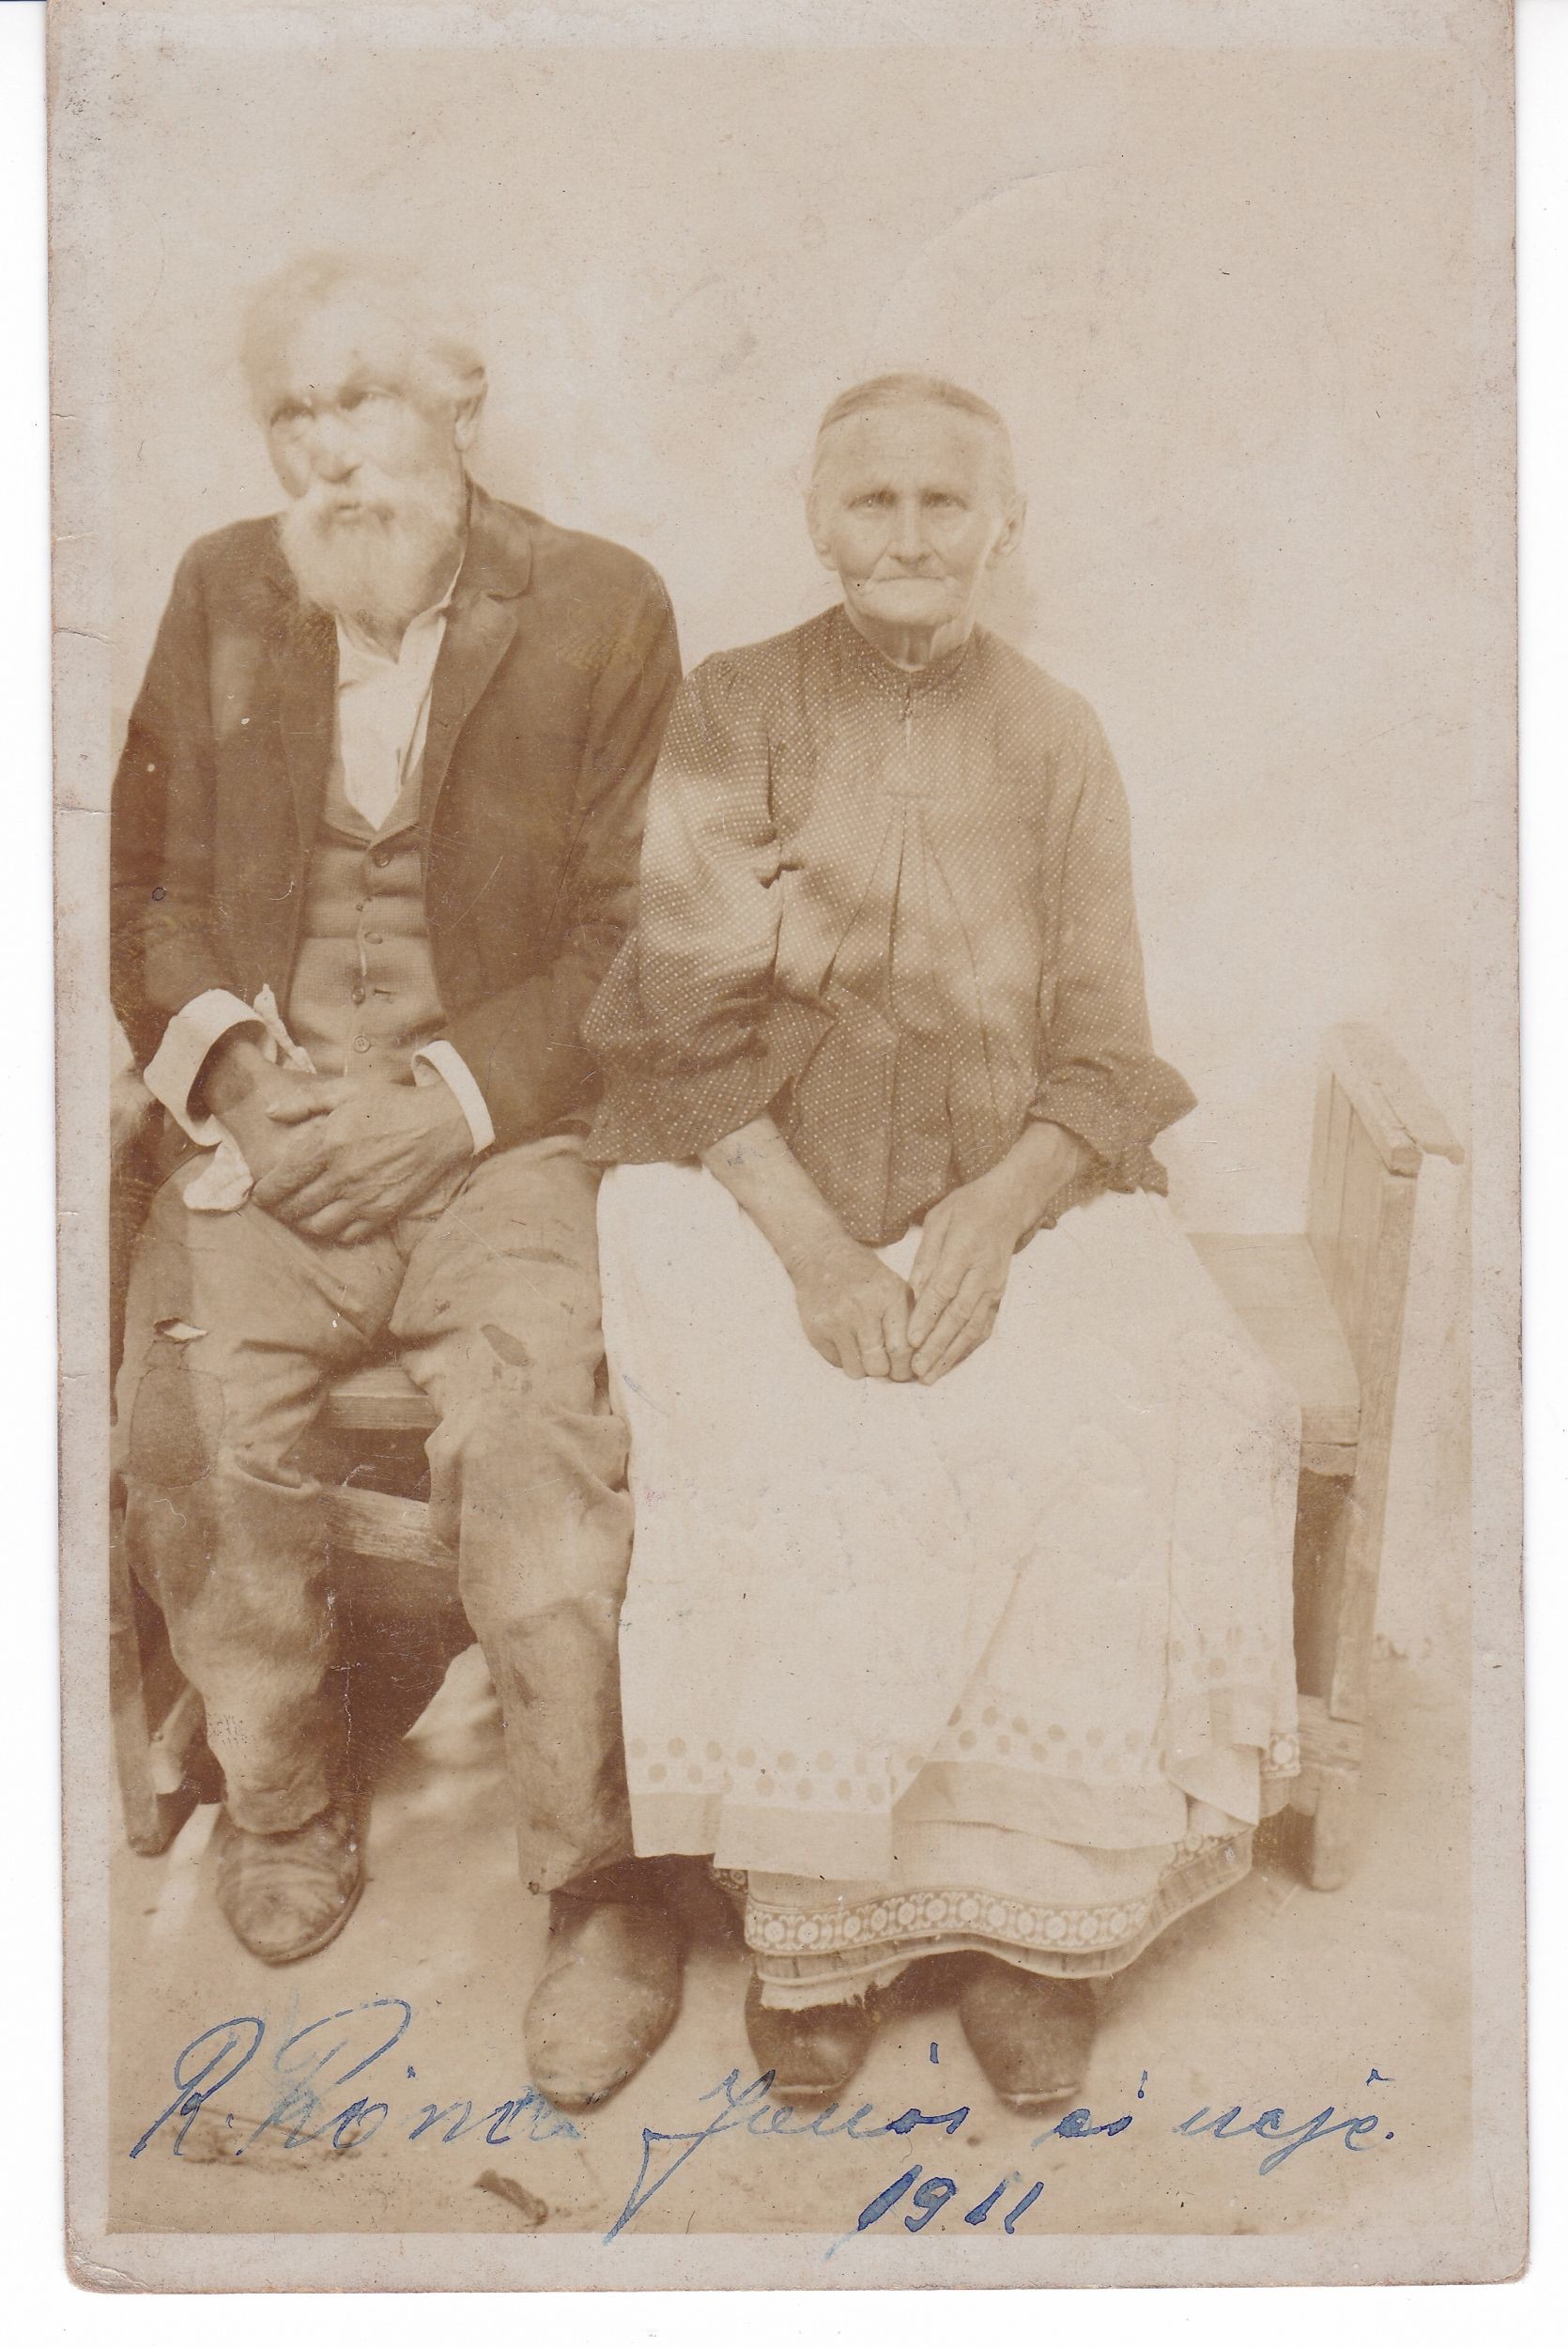 Rippl-Rónai János és neje 1911, Kossuth imádó Ripli bácsi, AD_10354-2016 (Rippl-Rónai Múzeum CC BY-NC-SA)